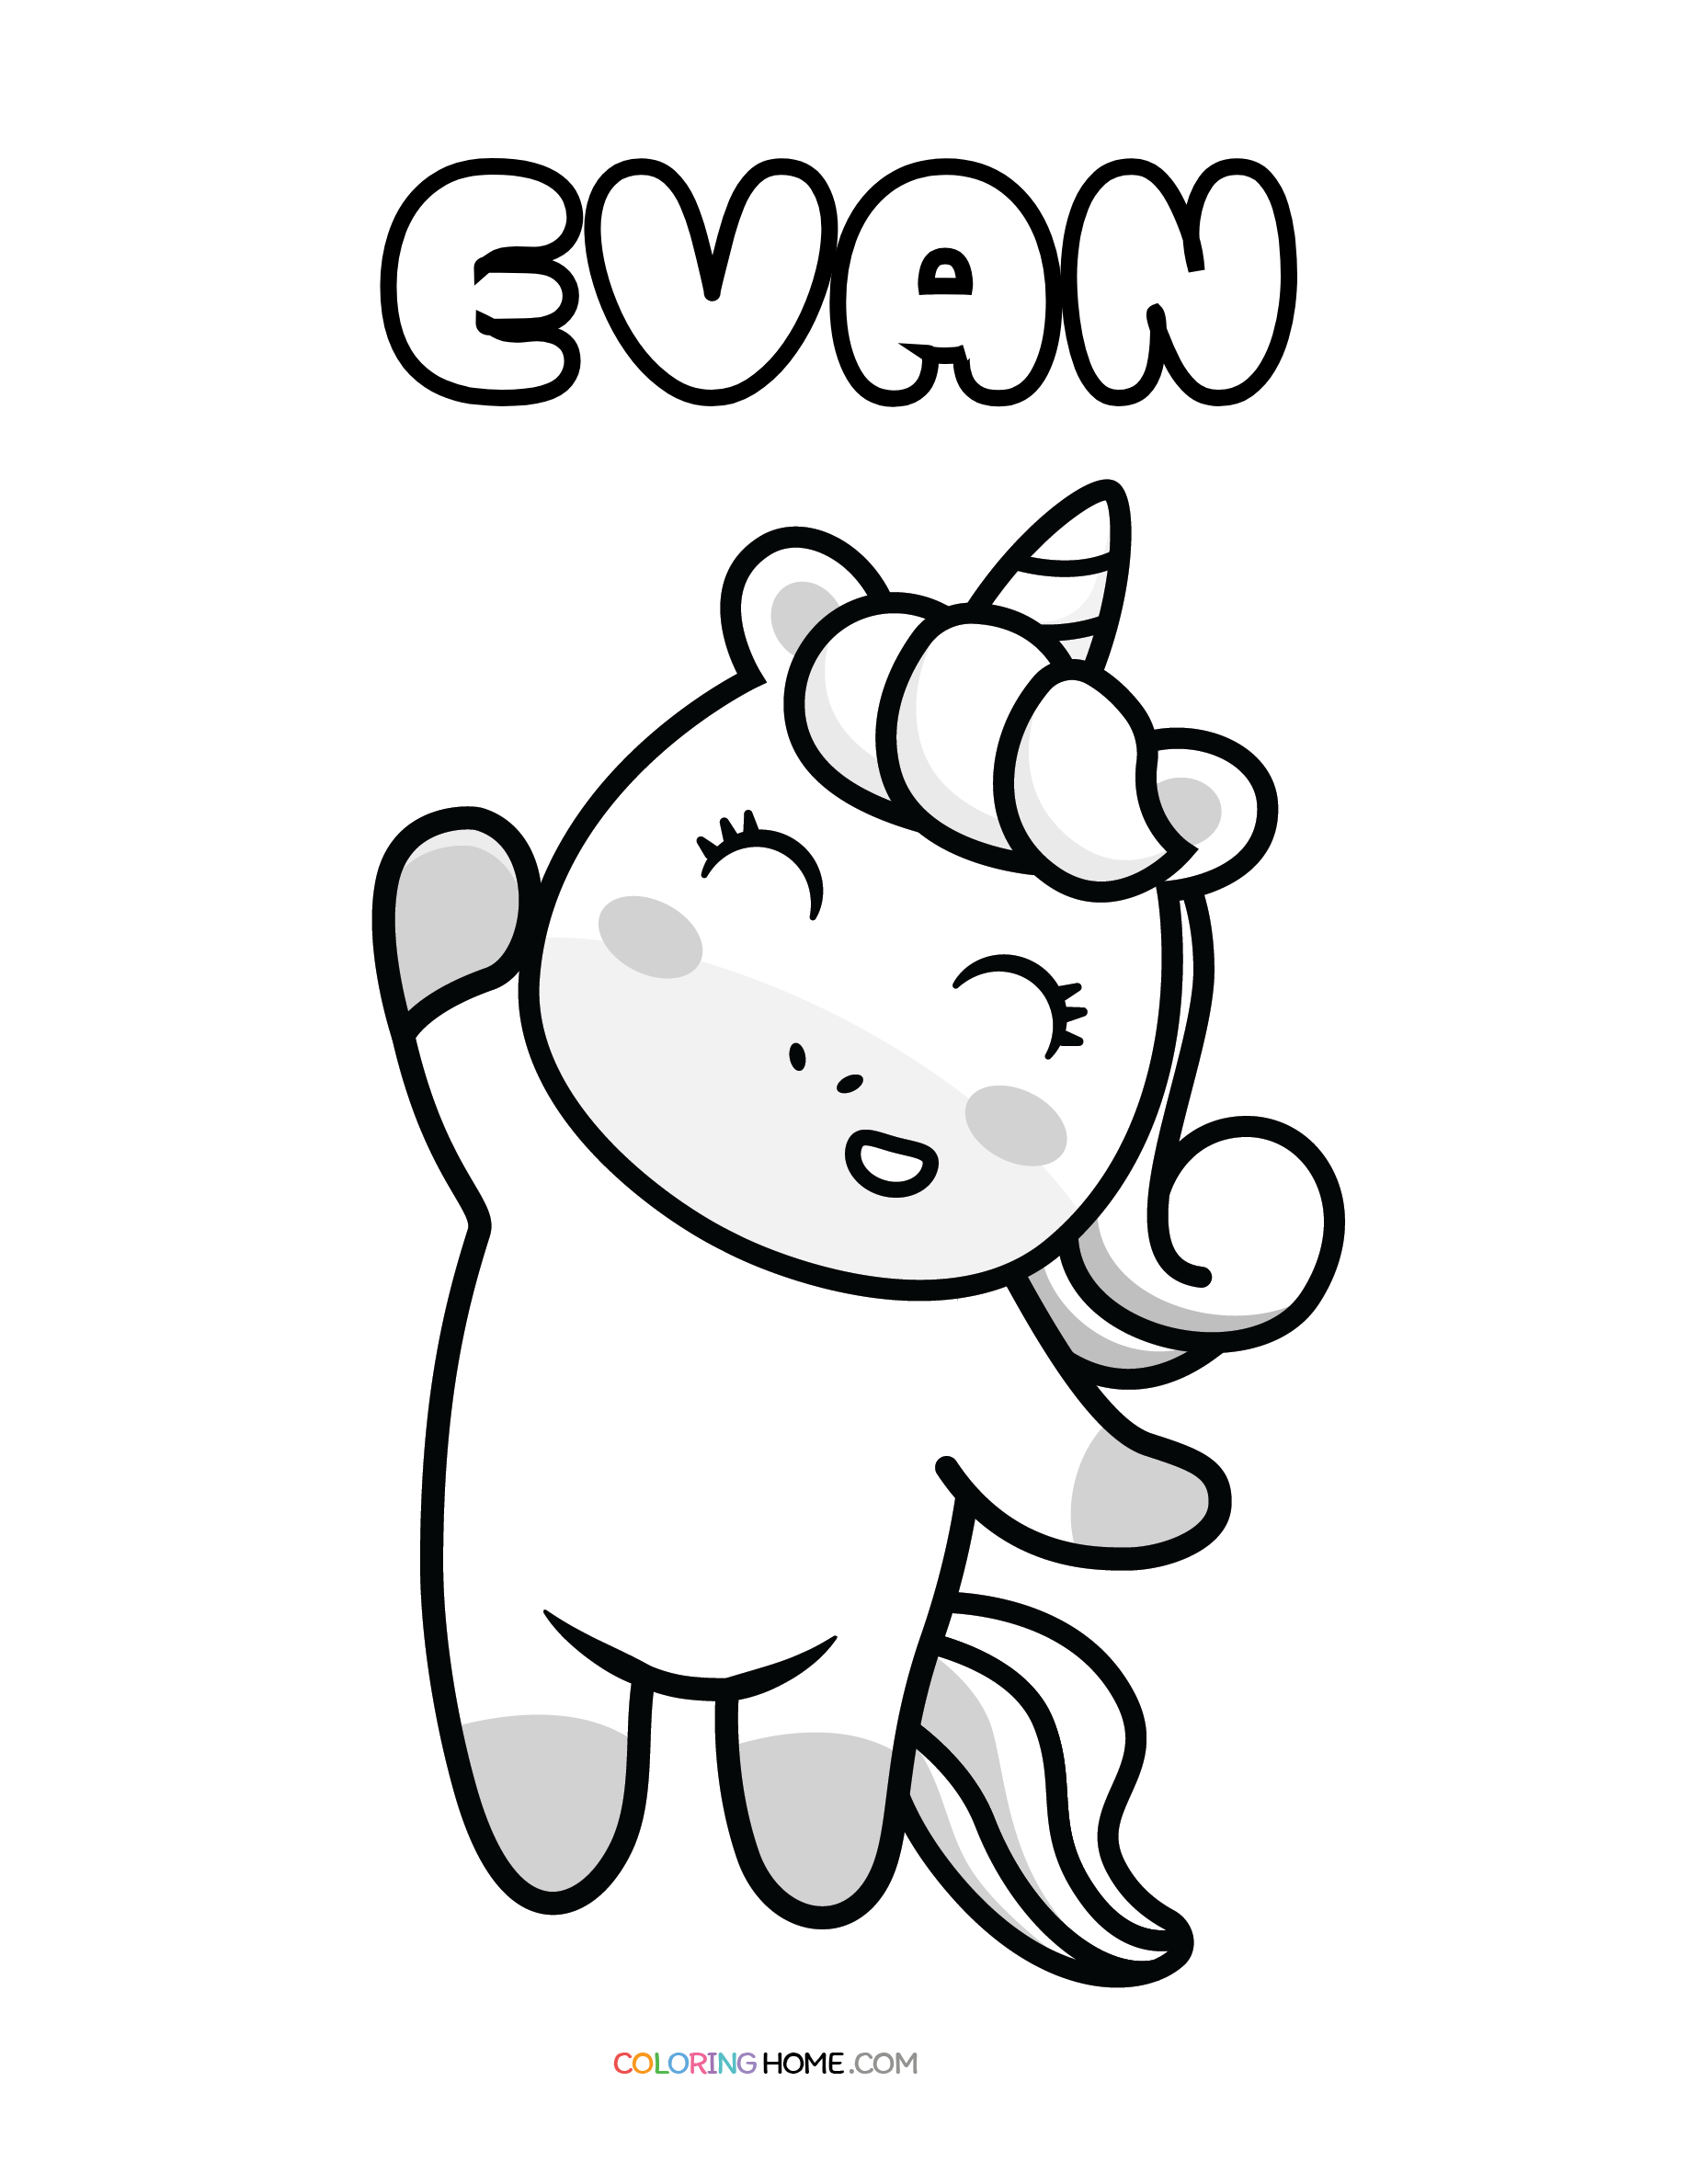 Evan unicorn coloring page